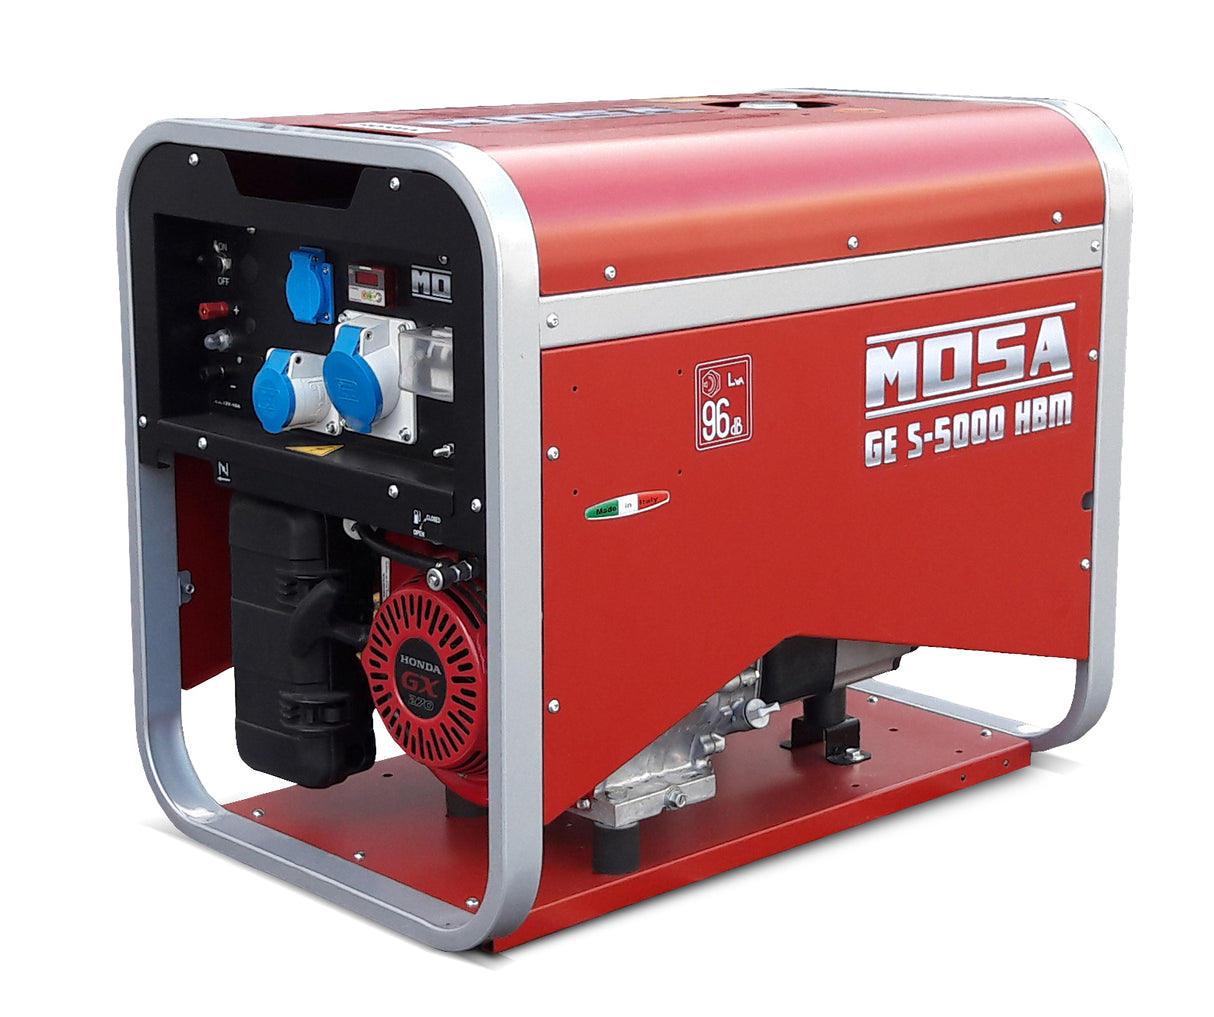 Portable power generator MOSA GES 5000 HBM